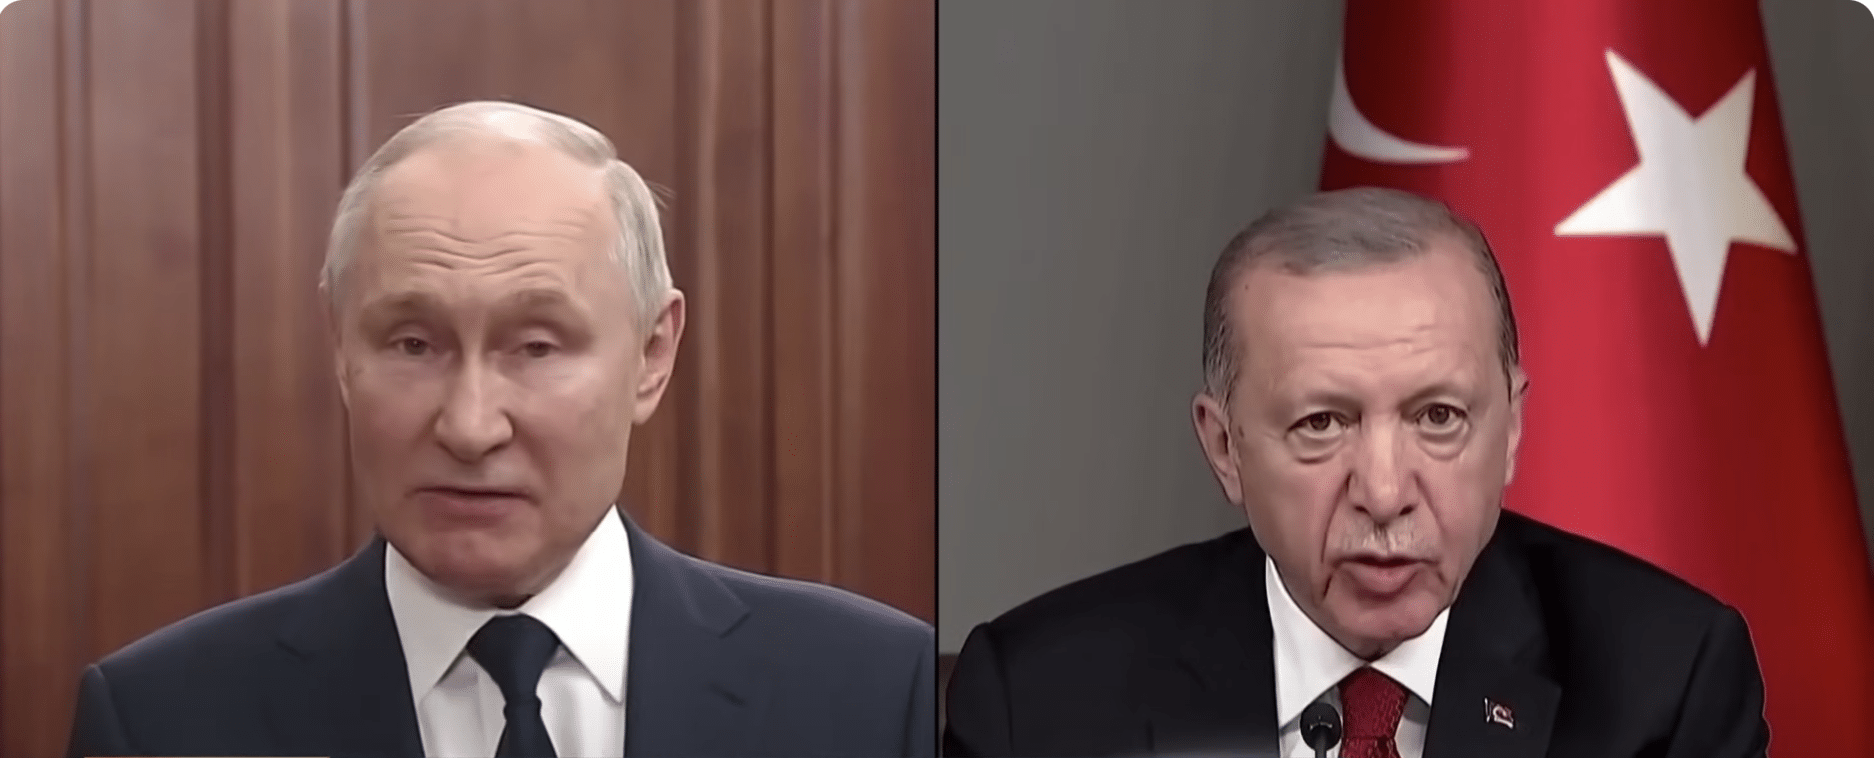 Erdogan meets Putin in a bid to reestablish the “Black Sea grain deal”